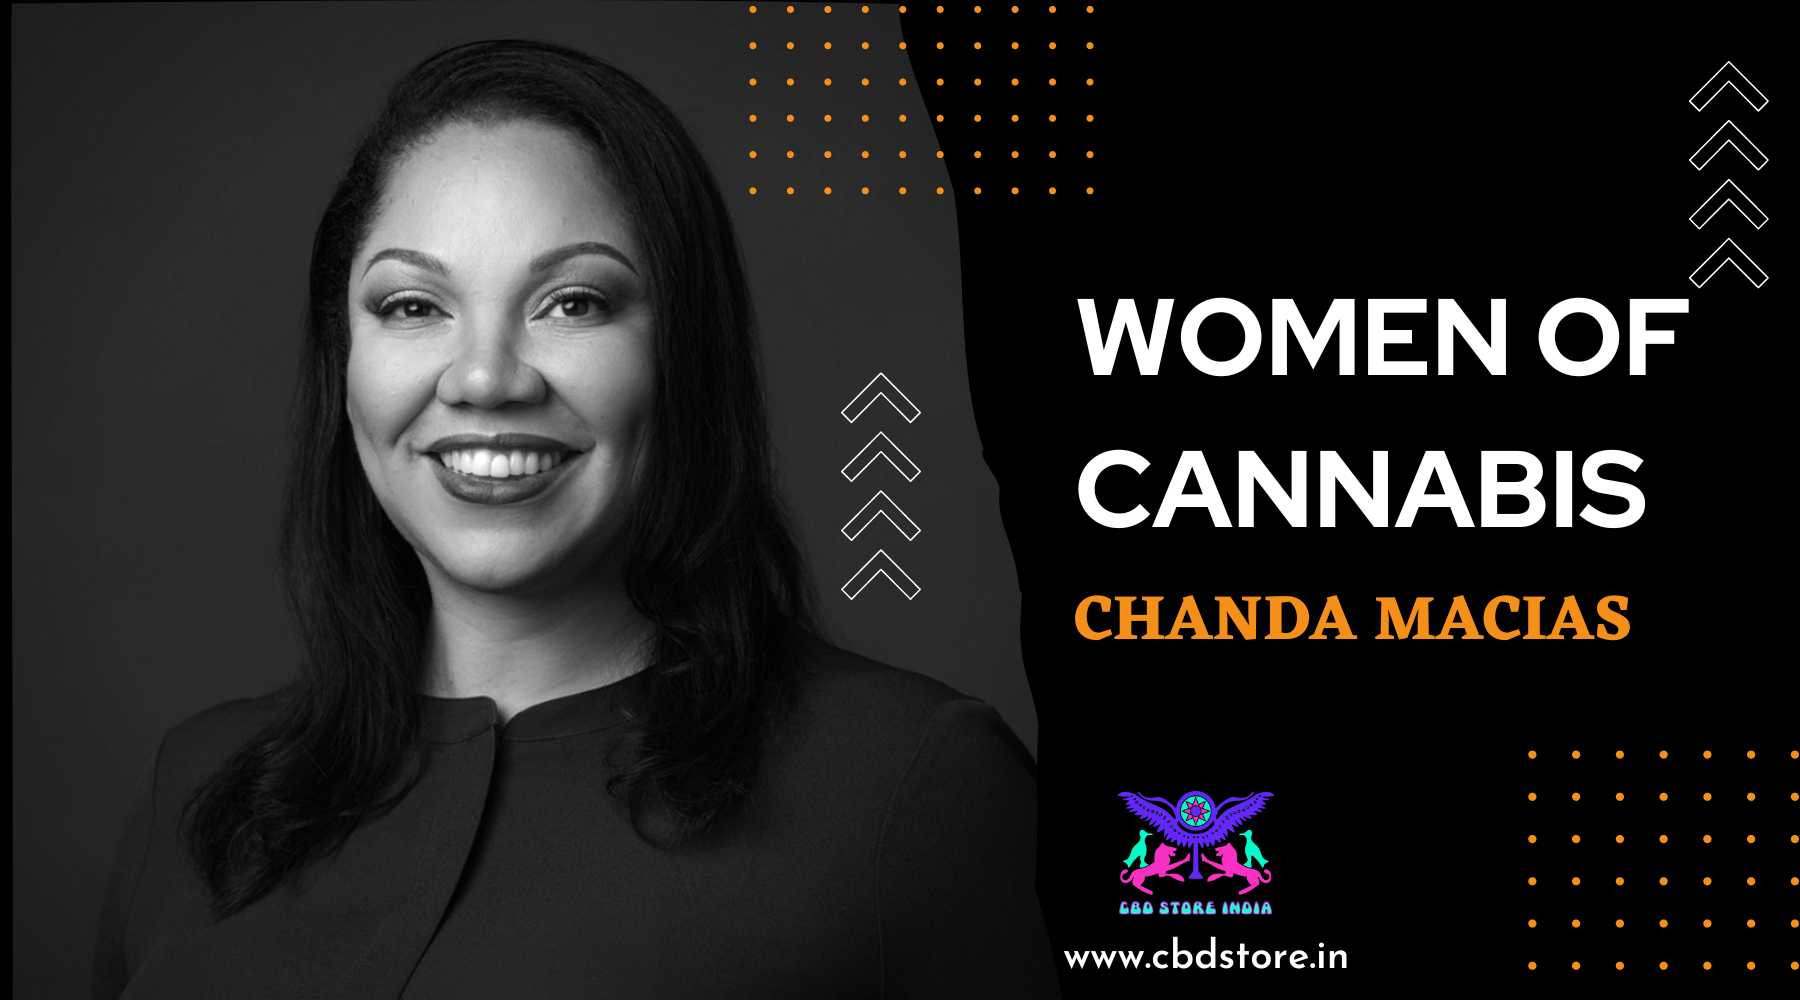 Women of Cannabis: Chanda Macias inspires us with her dedication to Cannabis - CBD Store India